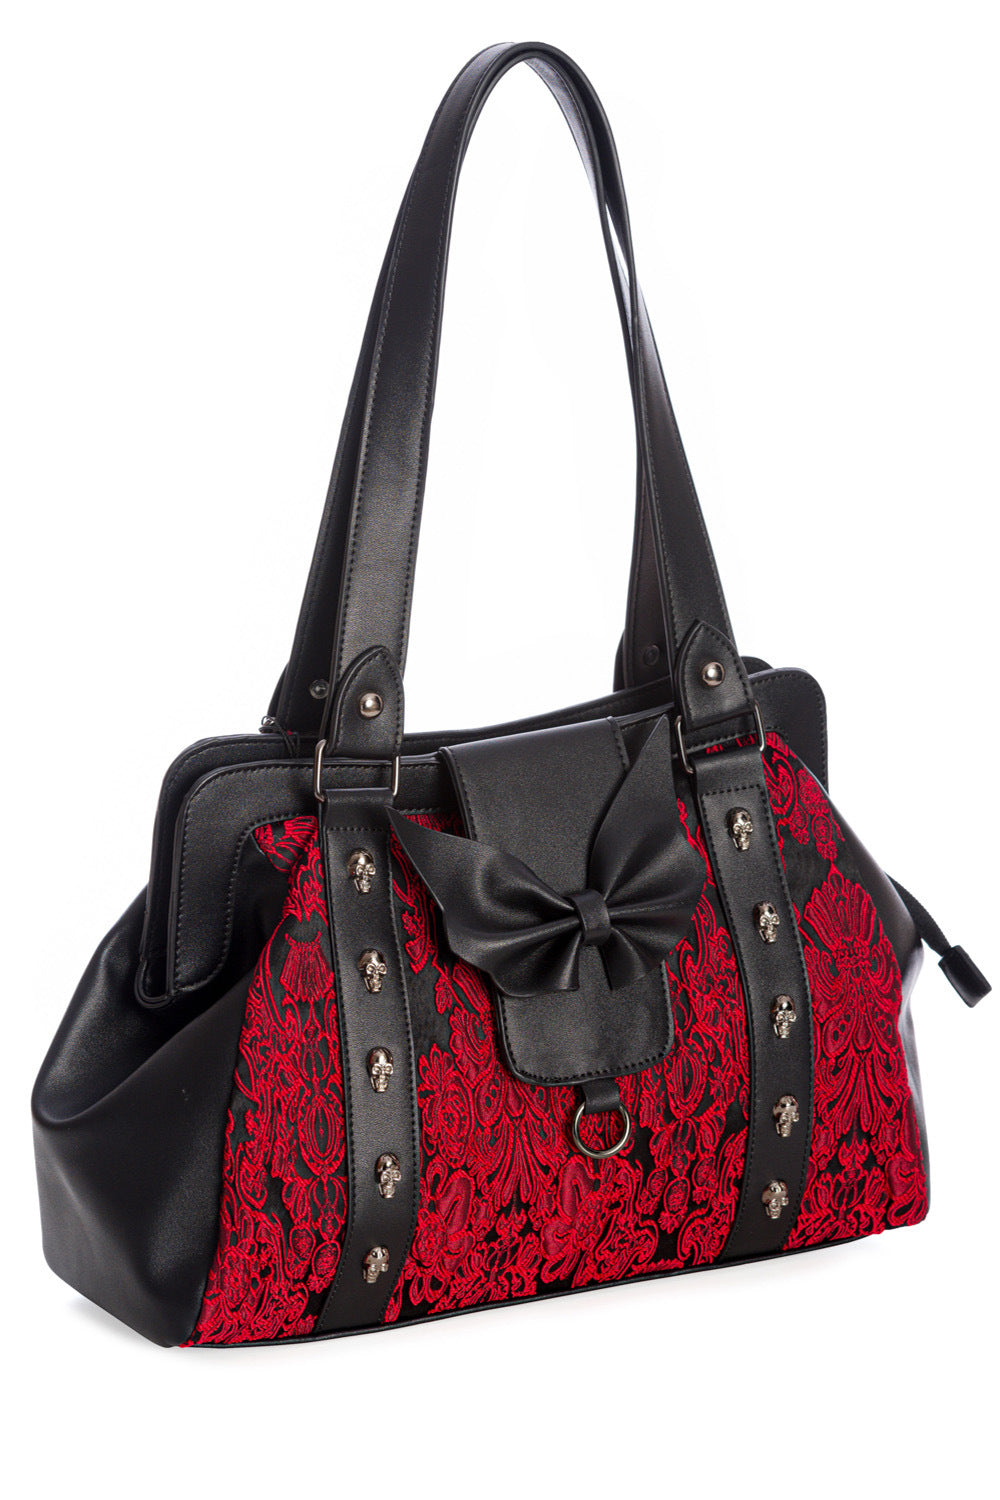 Banned Alternative Scarlet Illusion Victorian Gothic Satchel Bag